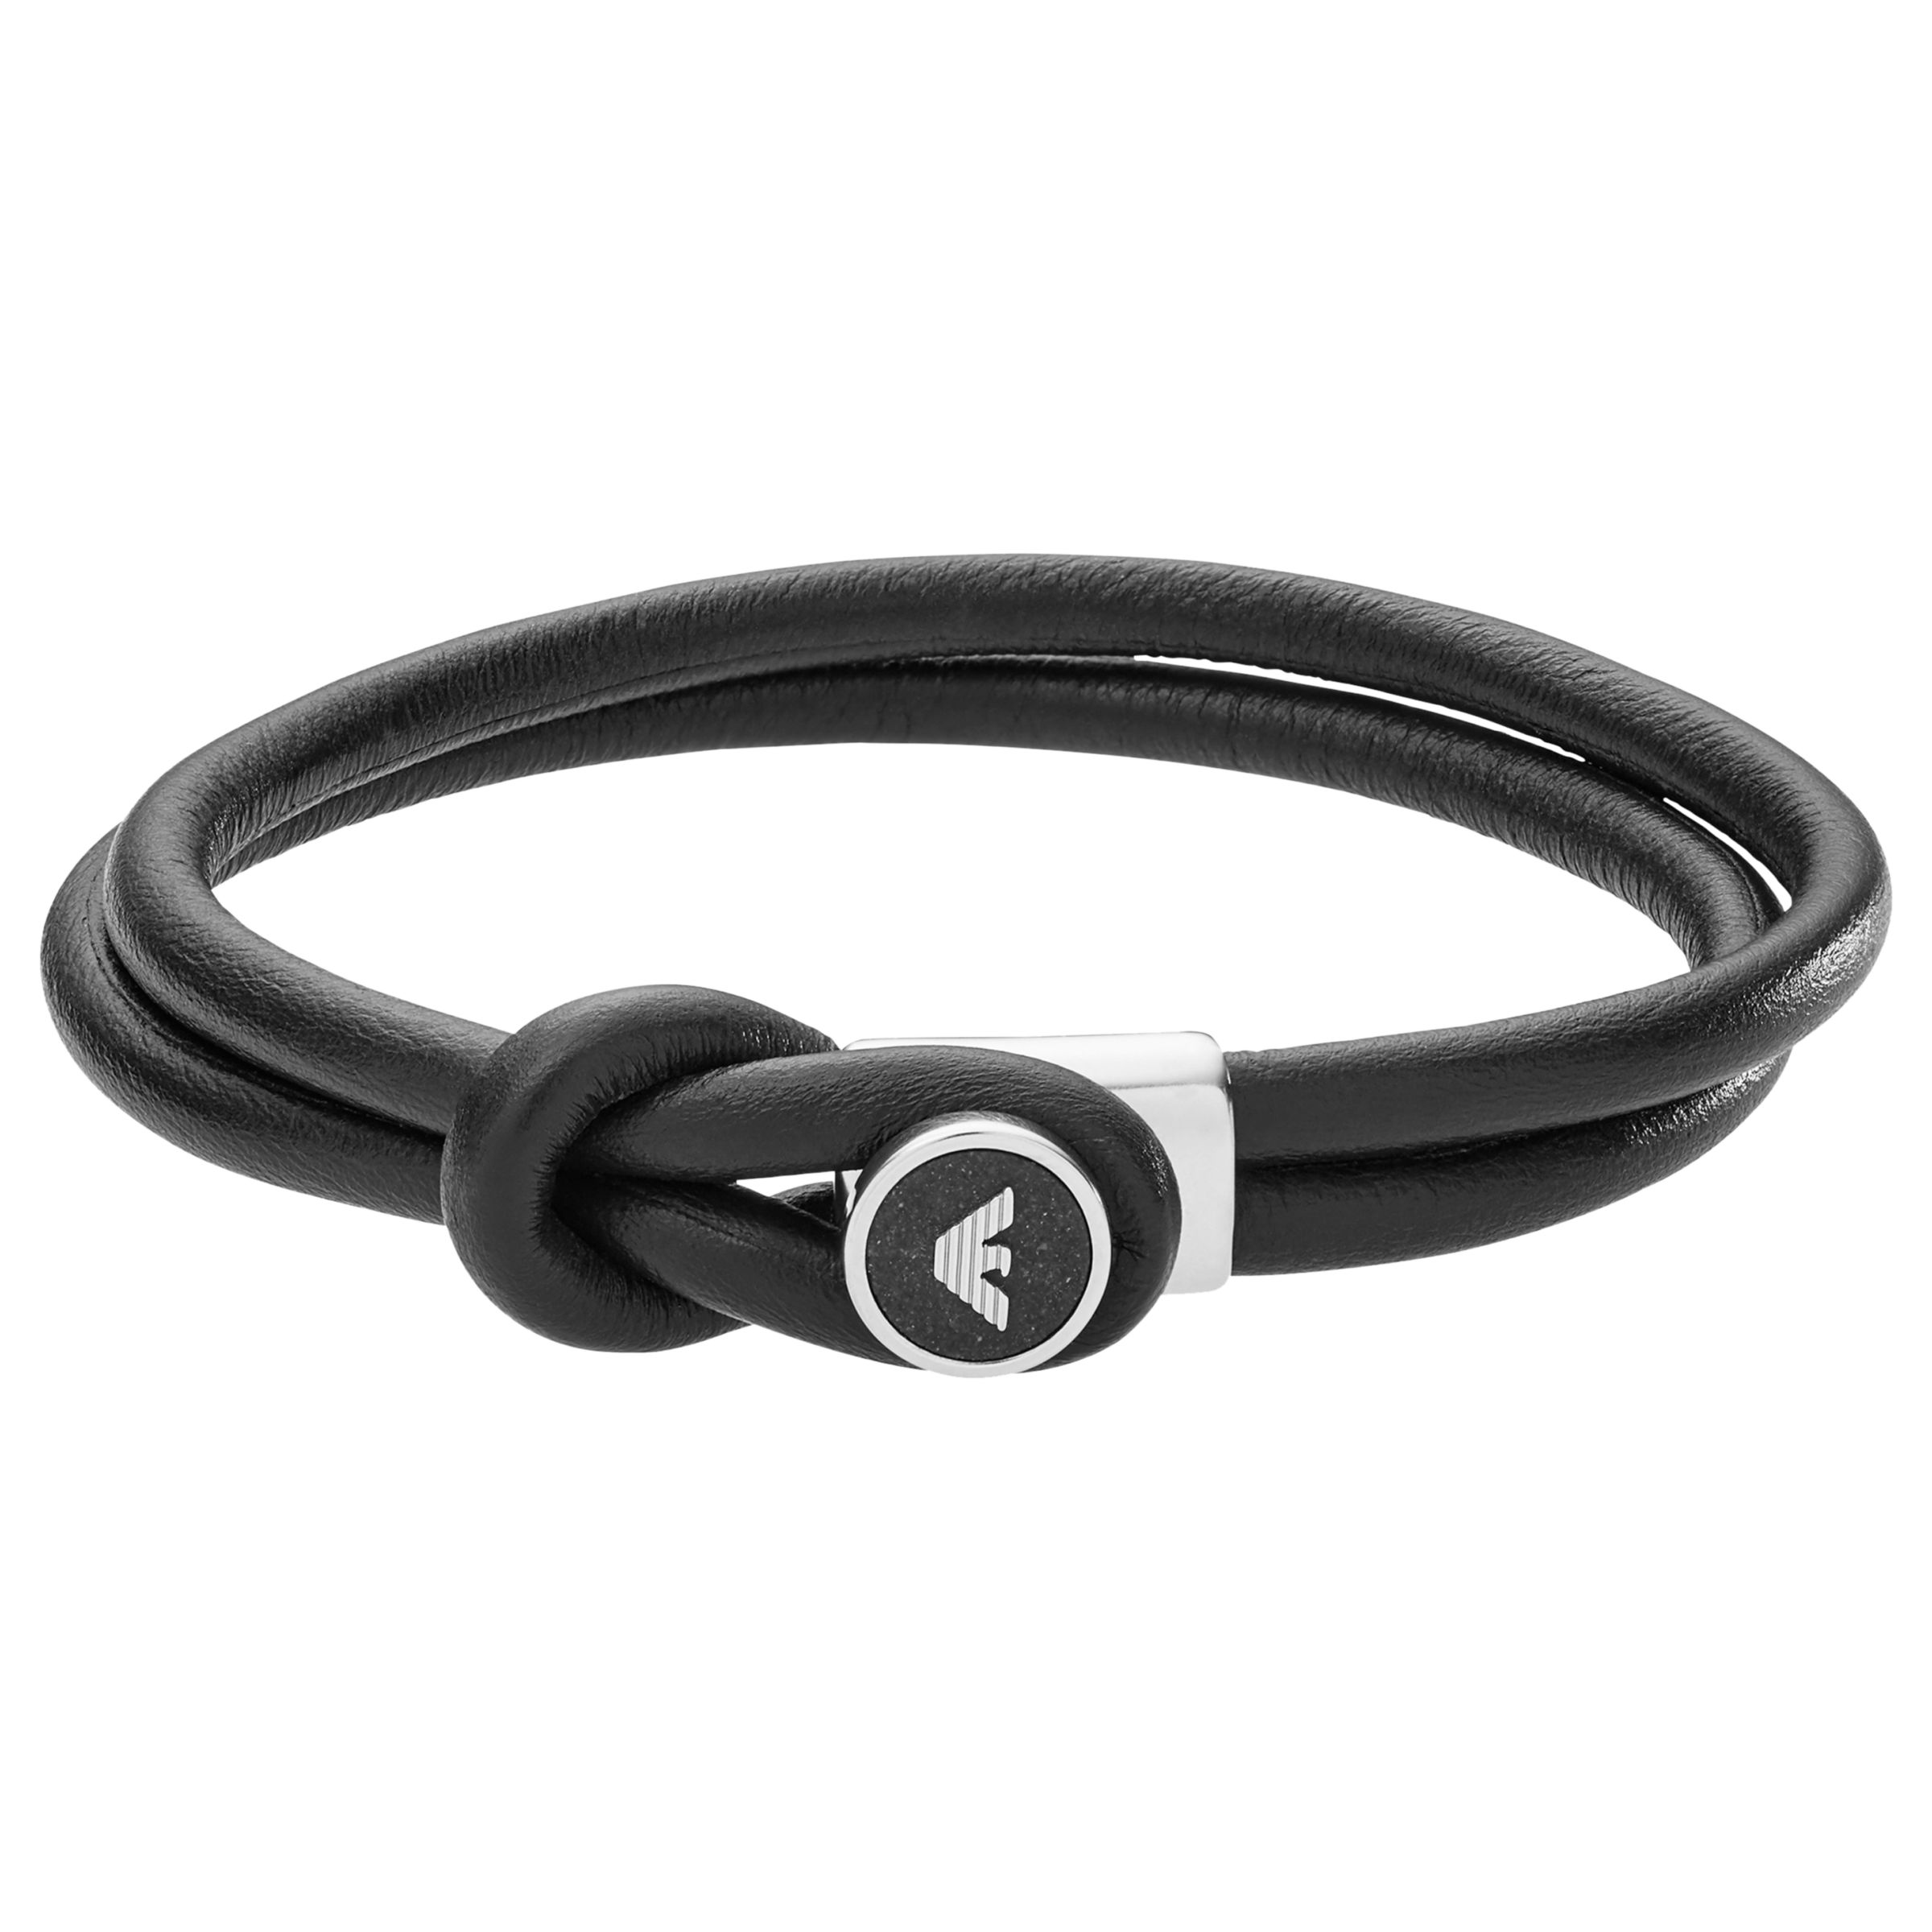 emporio armani unisex leather bracelet